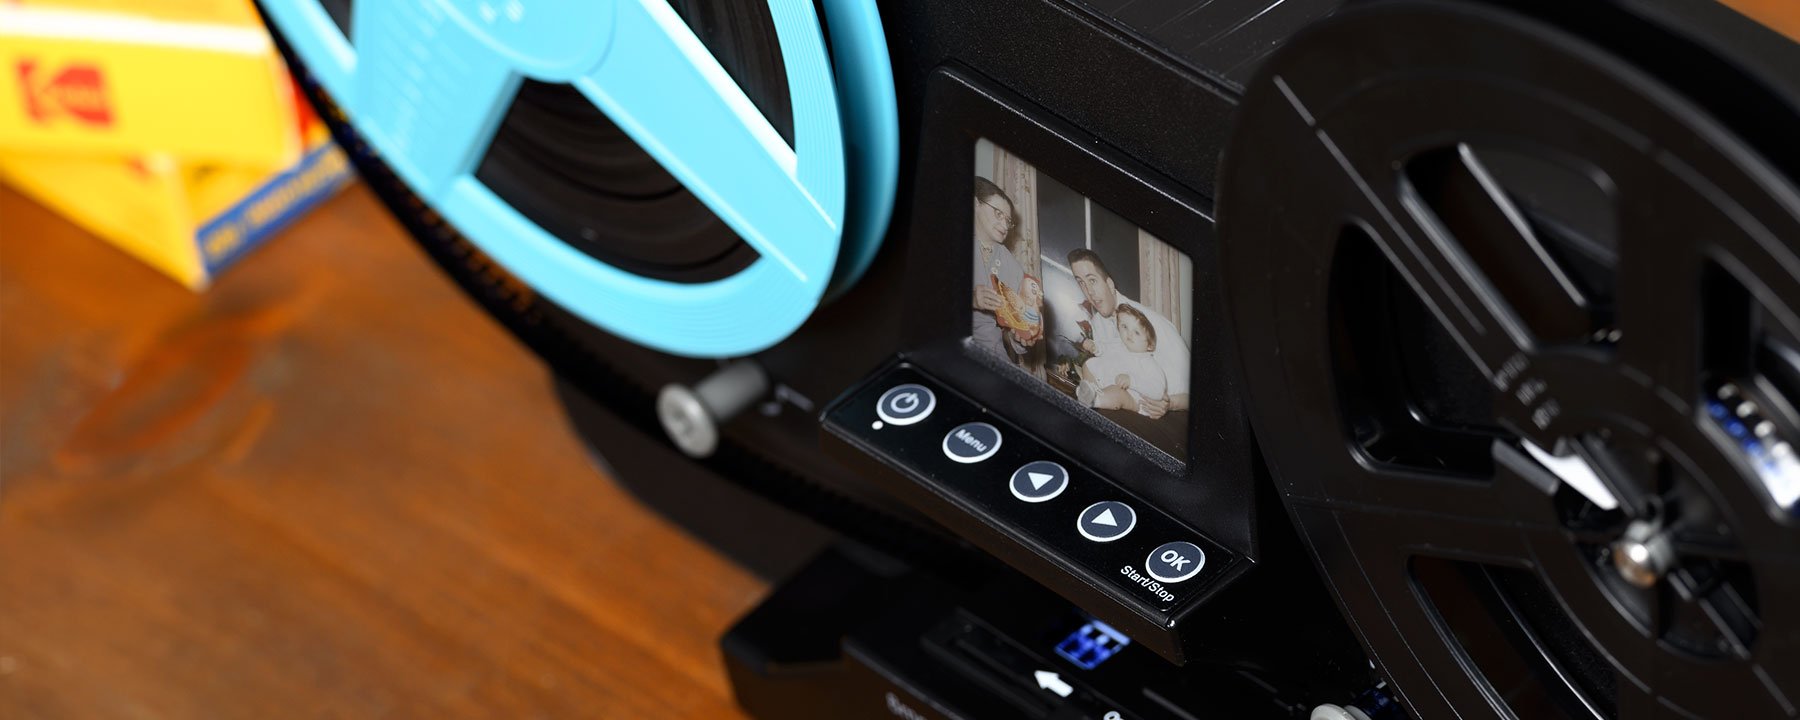 Magnasonic Super 8/8mm Film Scanner, Converts Film into Digital Video,  Vibran 61783270448